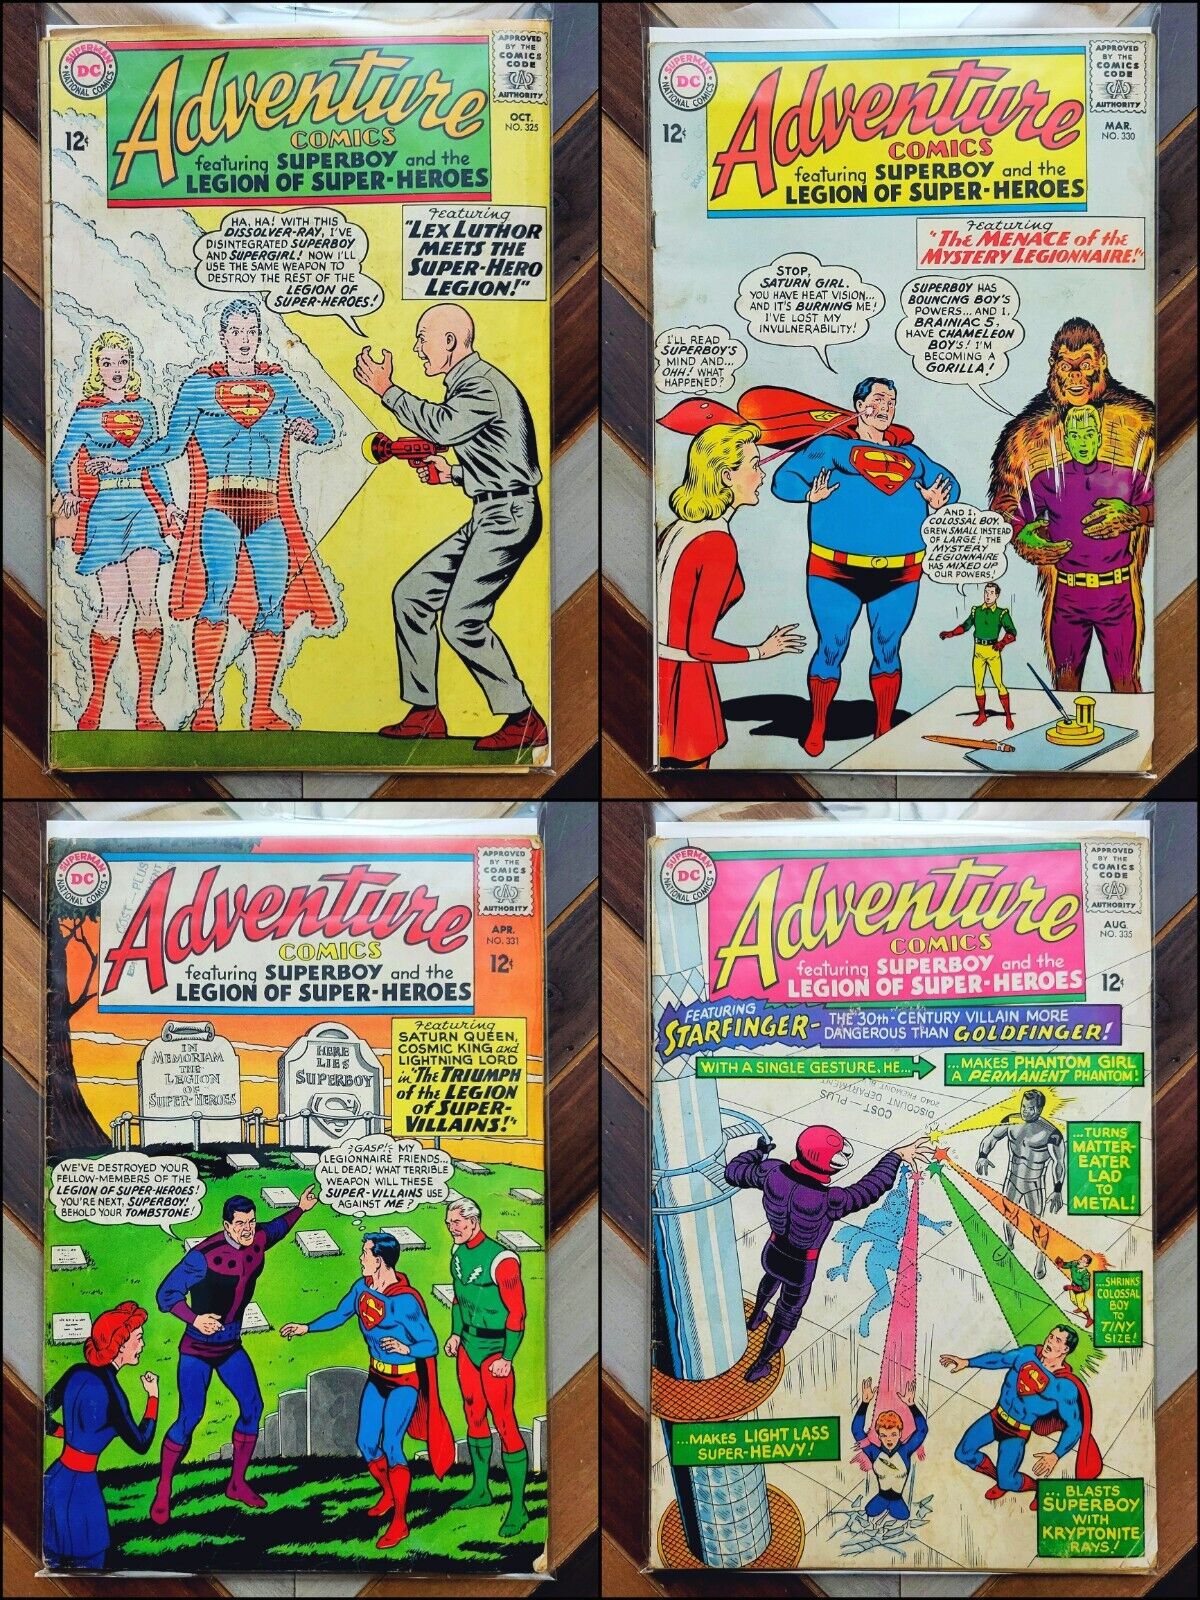 Adventure Comics #325 330 331 335 (DC 1964) Silver Age Luthor/Legion/Starfinger